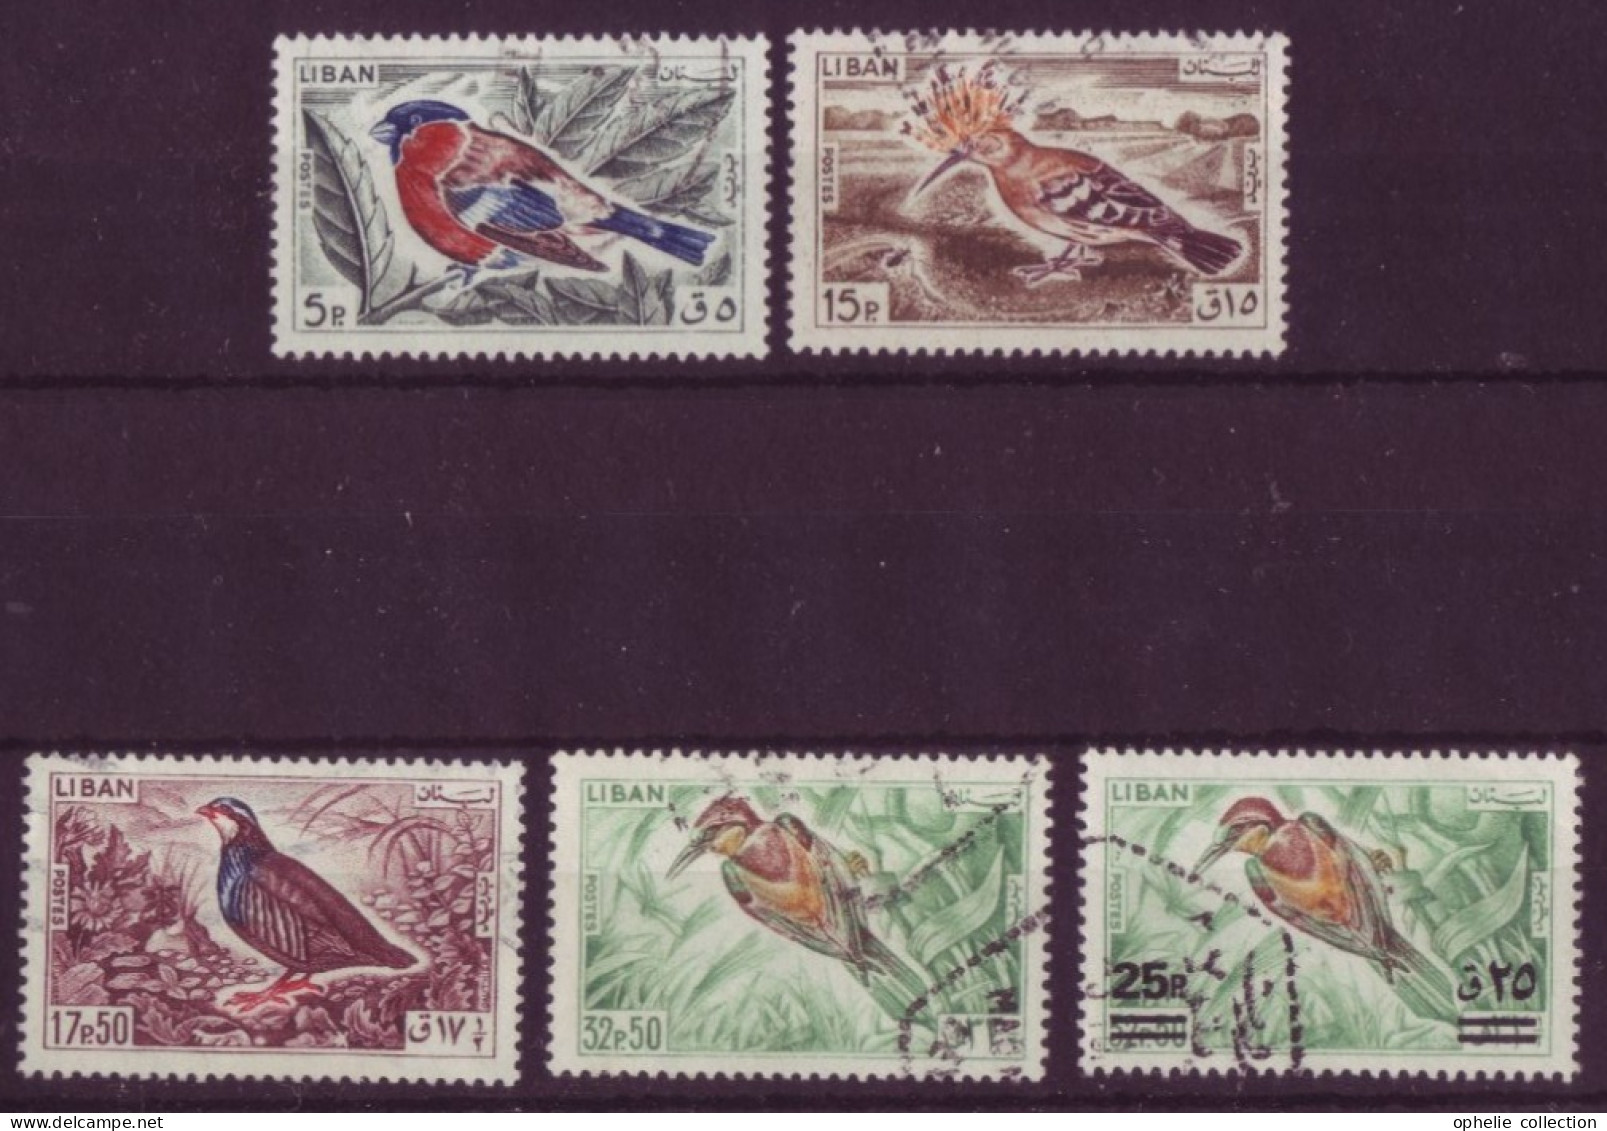 Asie - Liban - Oiseaux - 5 Timbres Différents - 7217 - Líbano